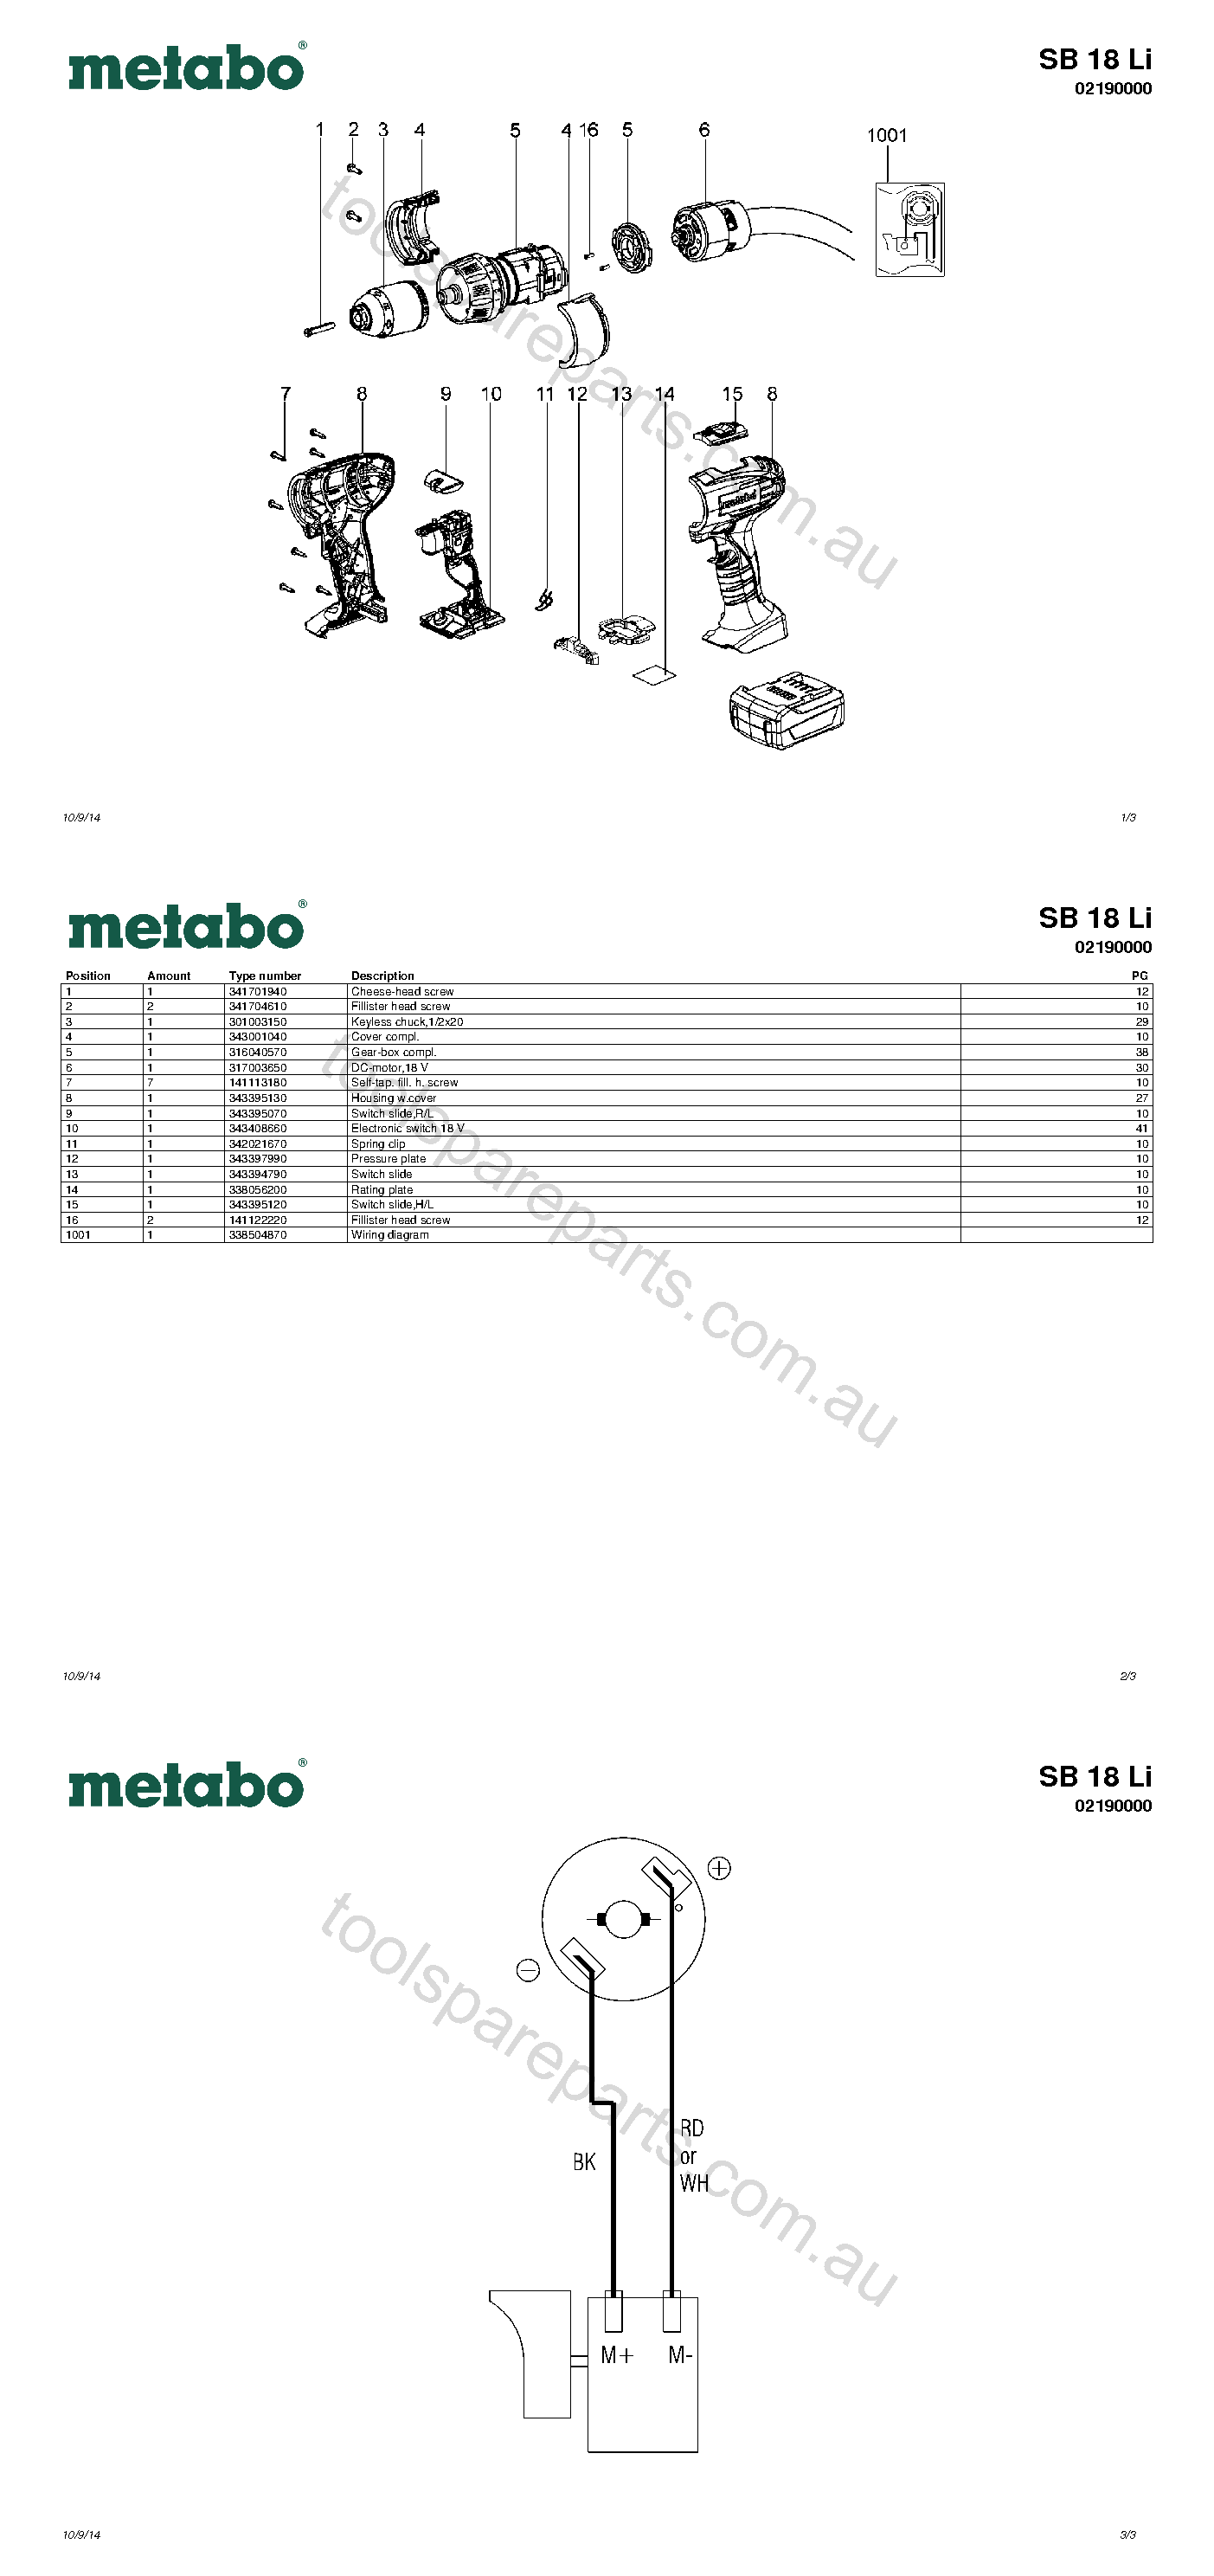 Metabo SB 18 Li 02190000  Diagram 1